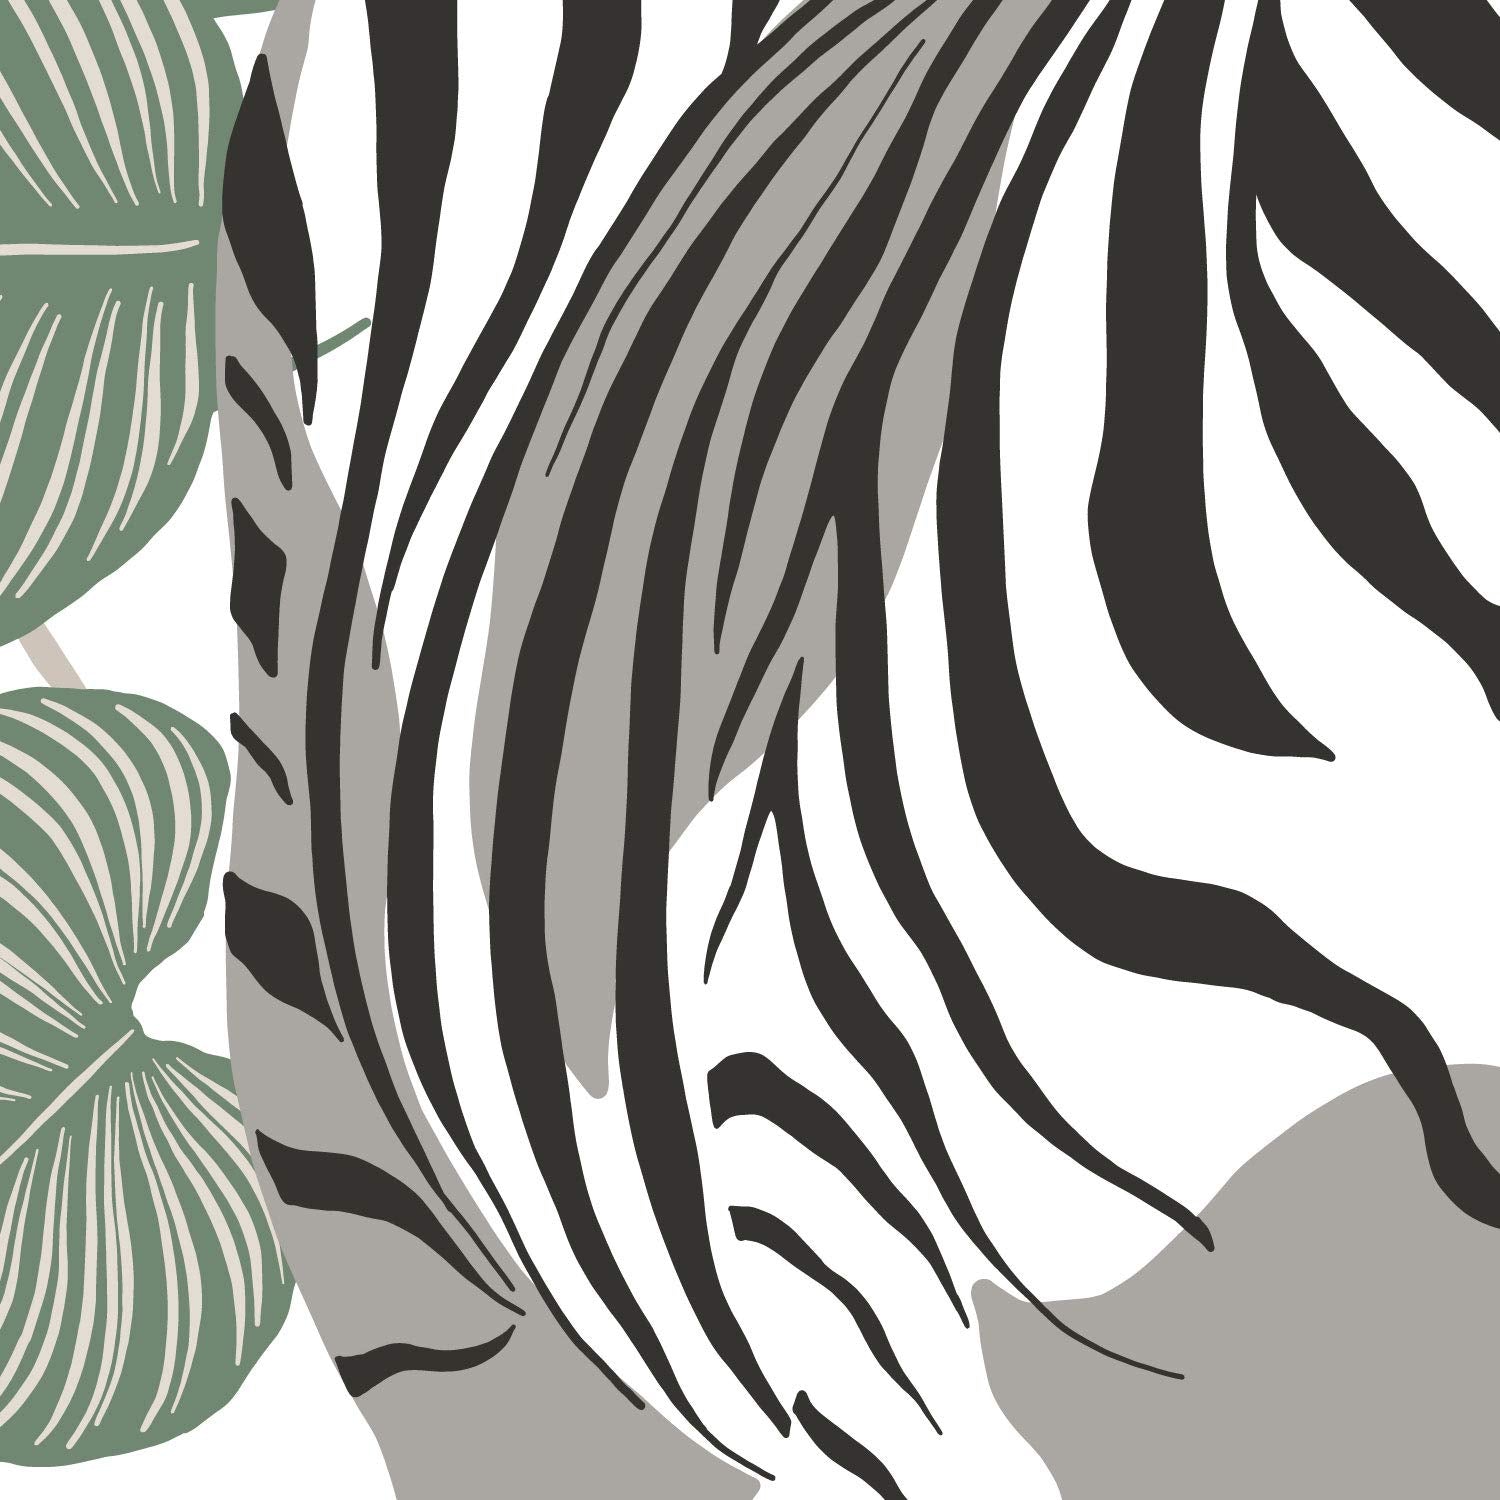 Set de posters de animales de la jungla. Lámina Cebra Jirafa con diseño de animales, flores y plantas de la jungla.-Artwork-Nacnic-Nacnic Estudio SL